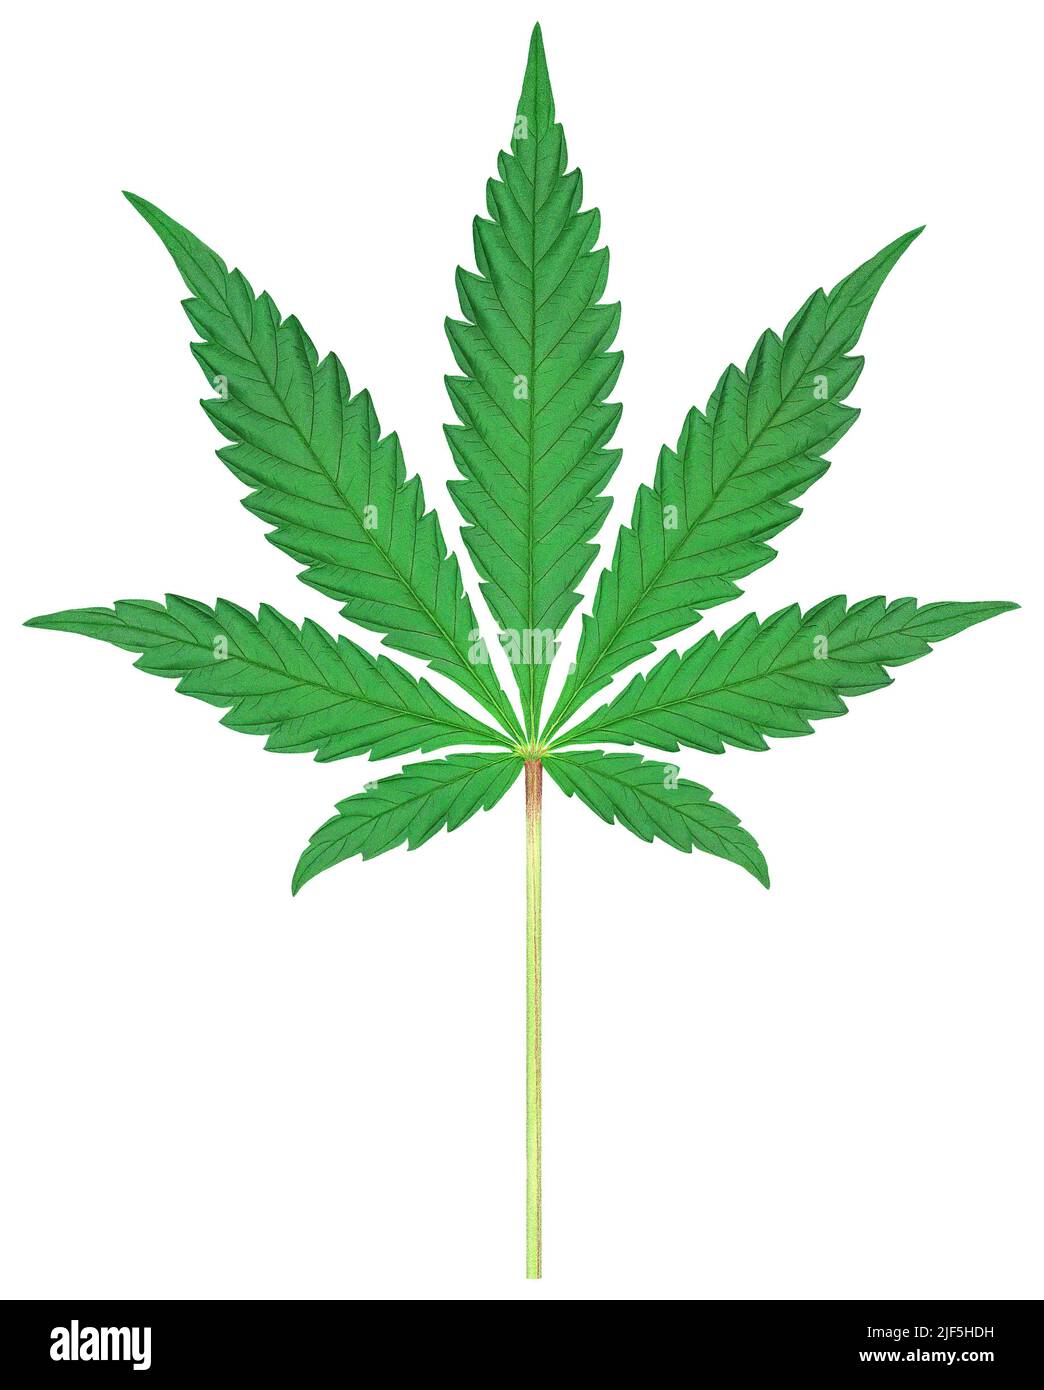 Cannabis leaf Stock Photo